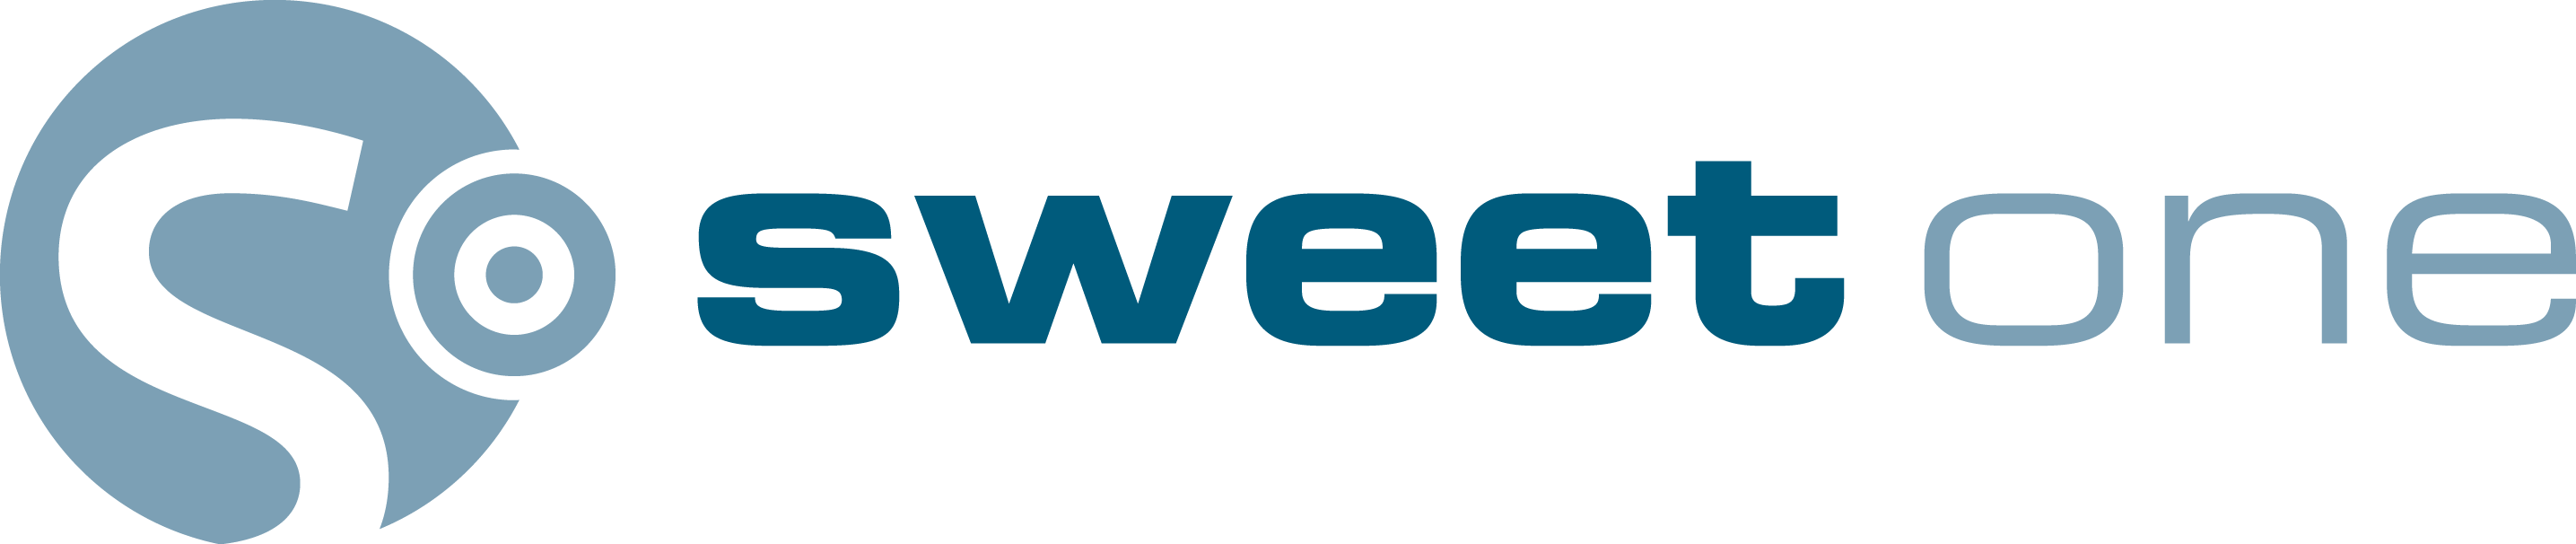 SweeOne | Das clevere Lieferanten Management System